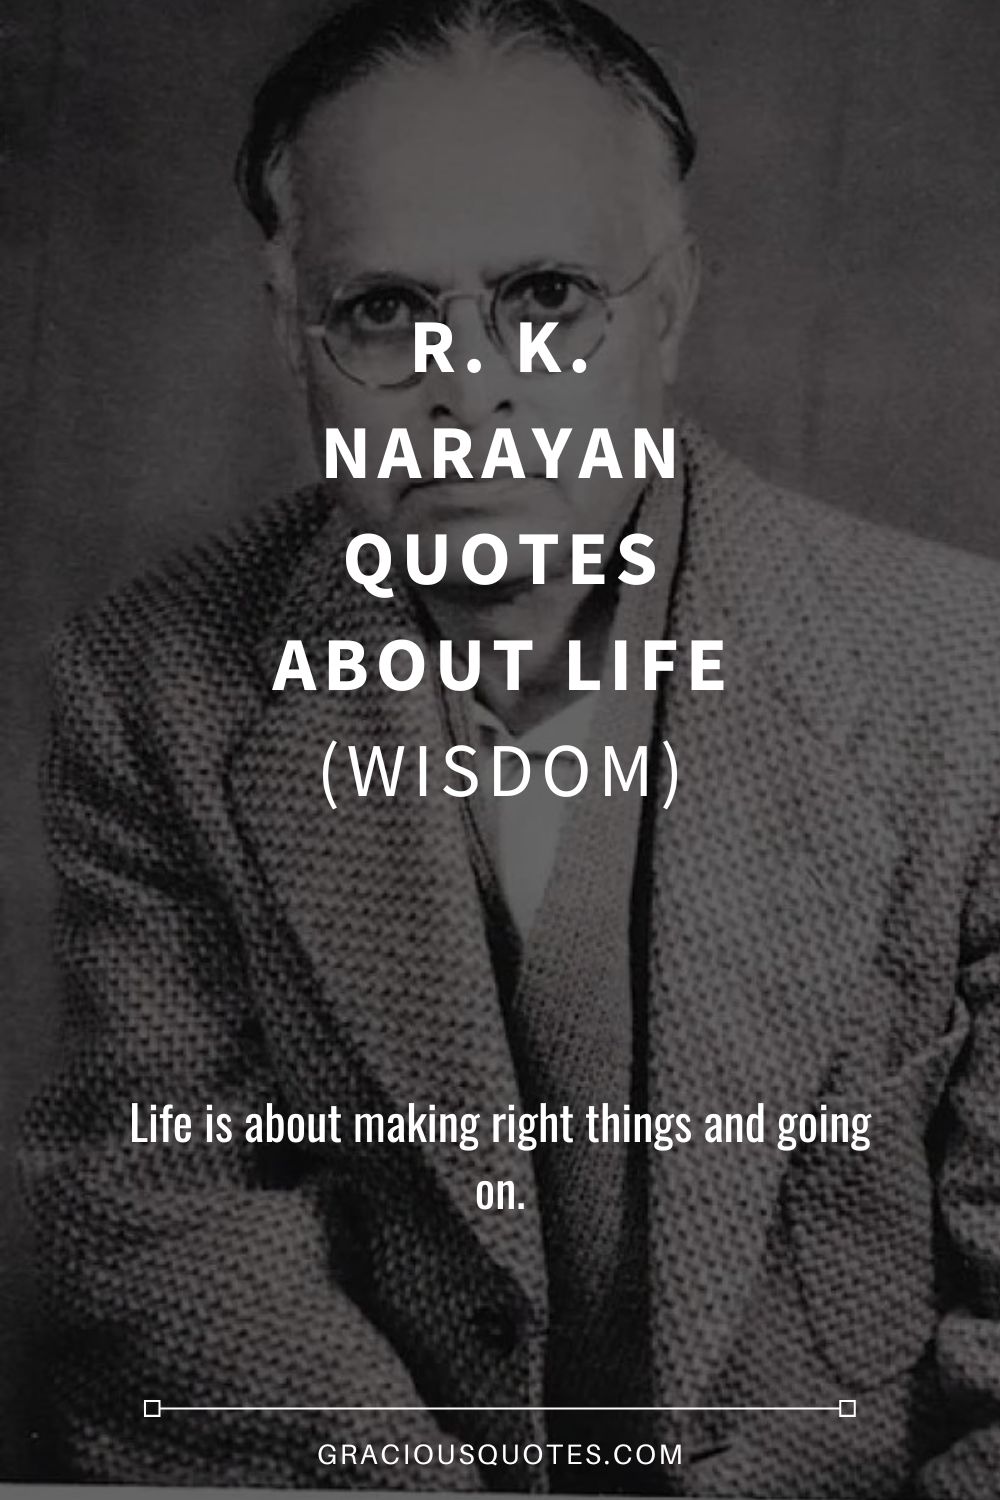 R. K. Narayan Quotes About Life (WISDOM) - Gracious Quotes